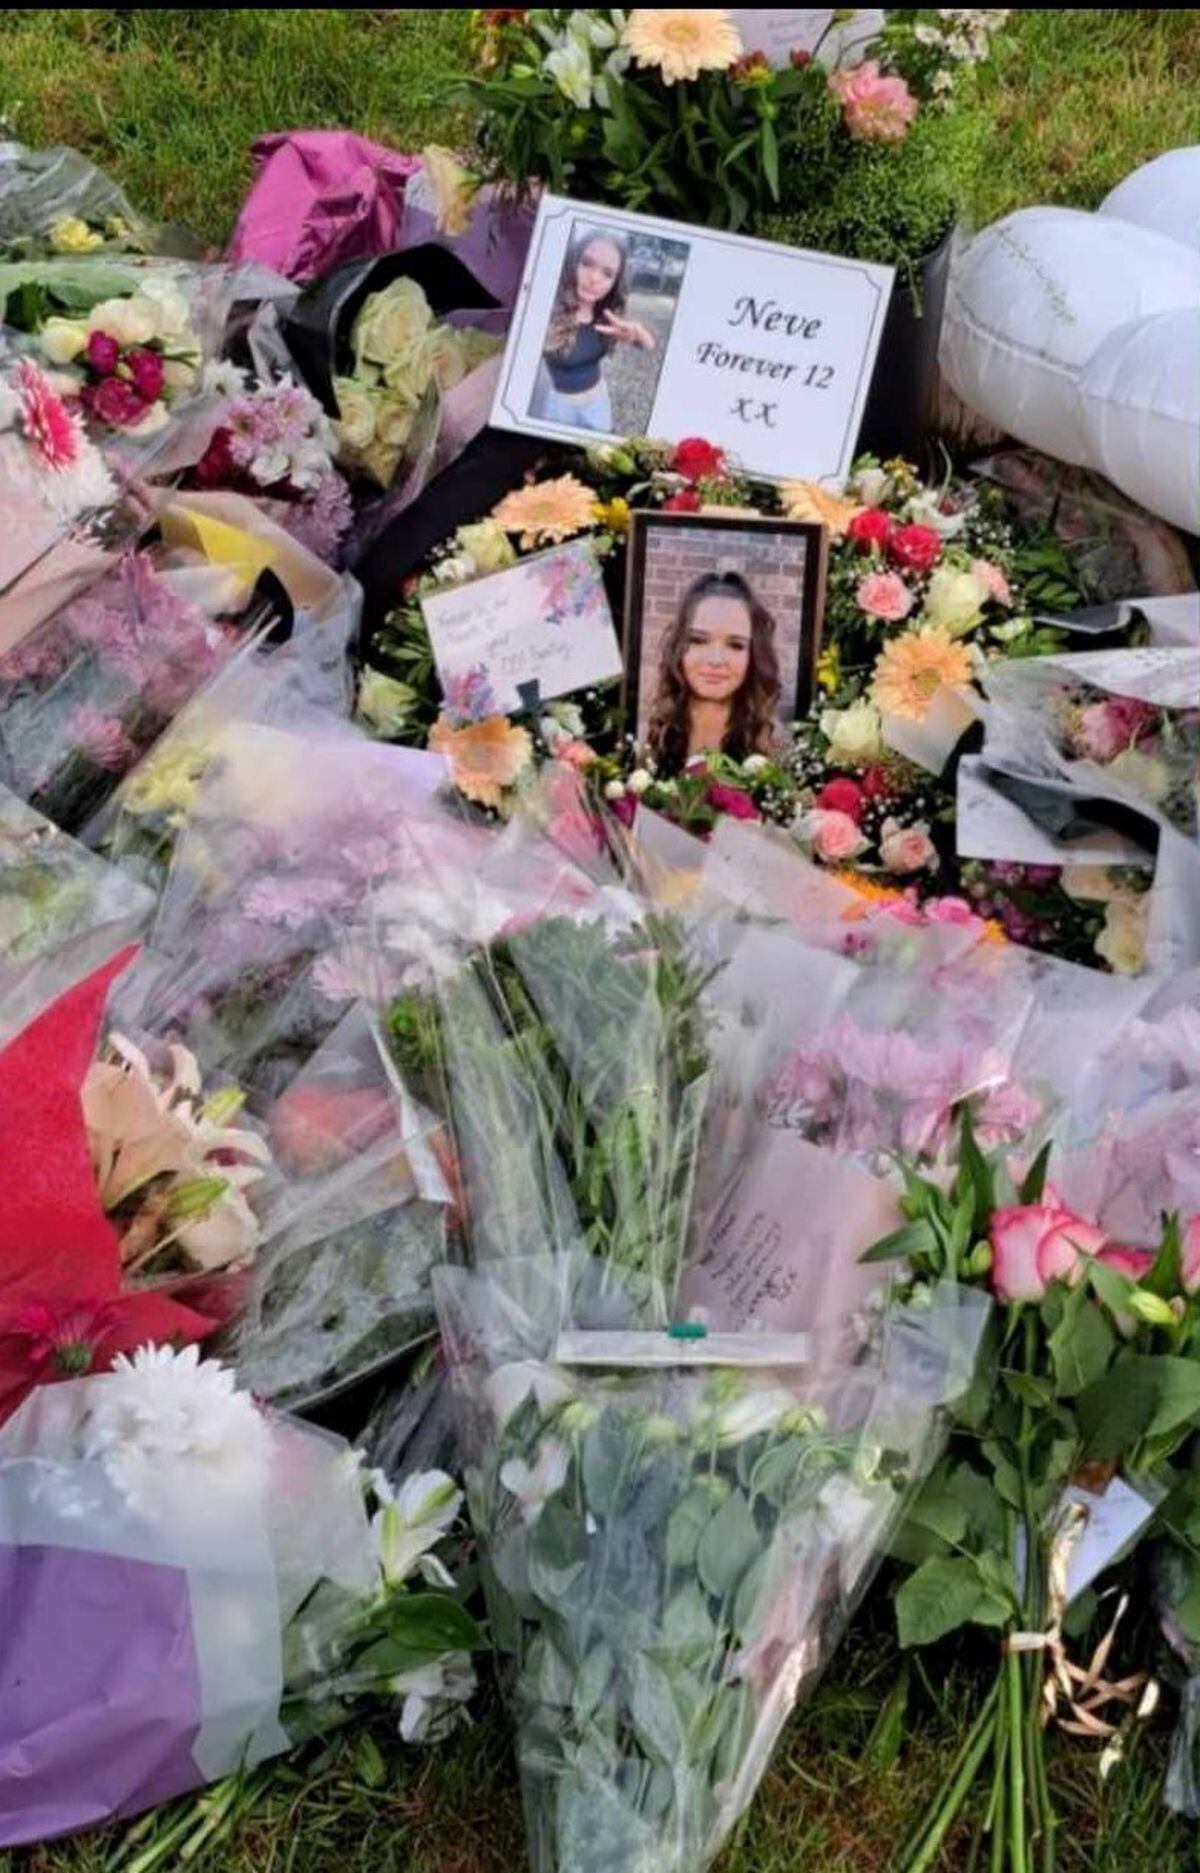 Flowers left in honour of Neve